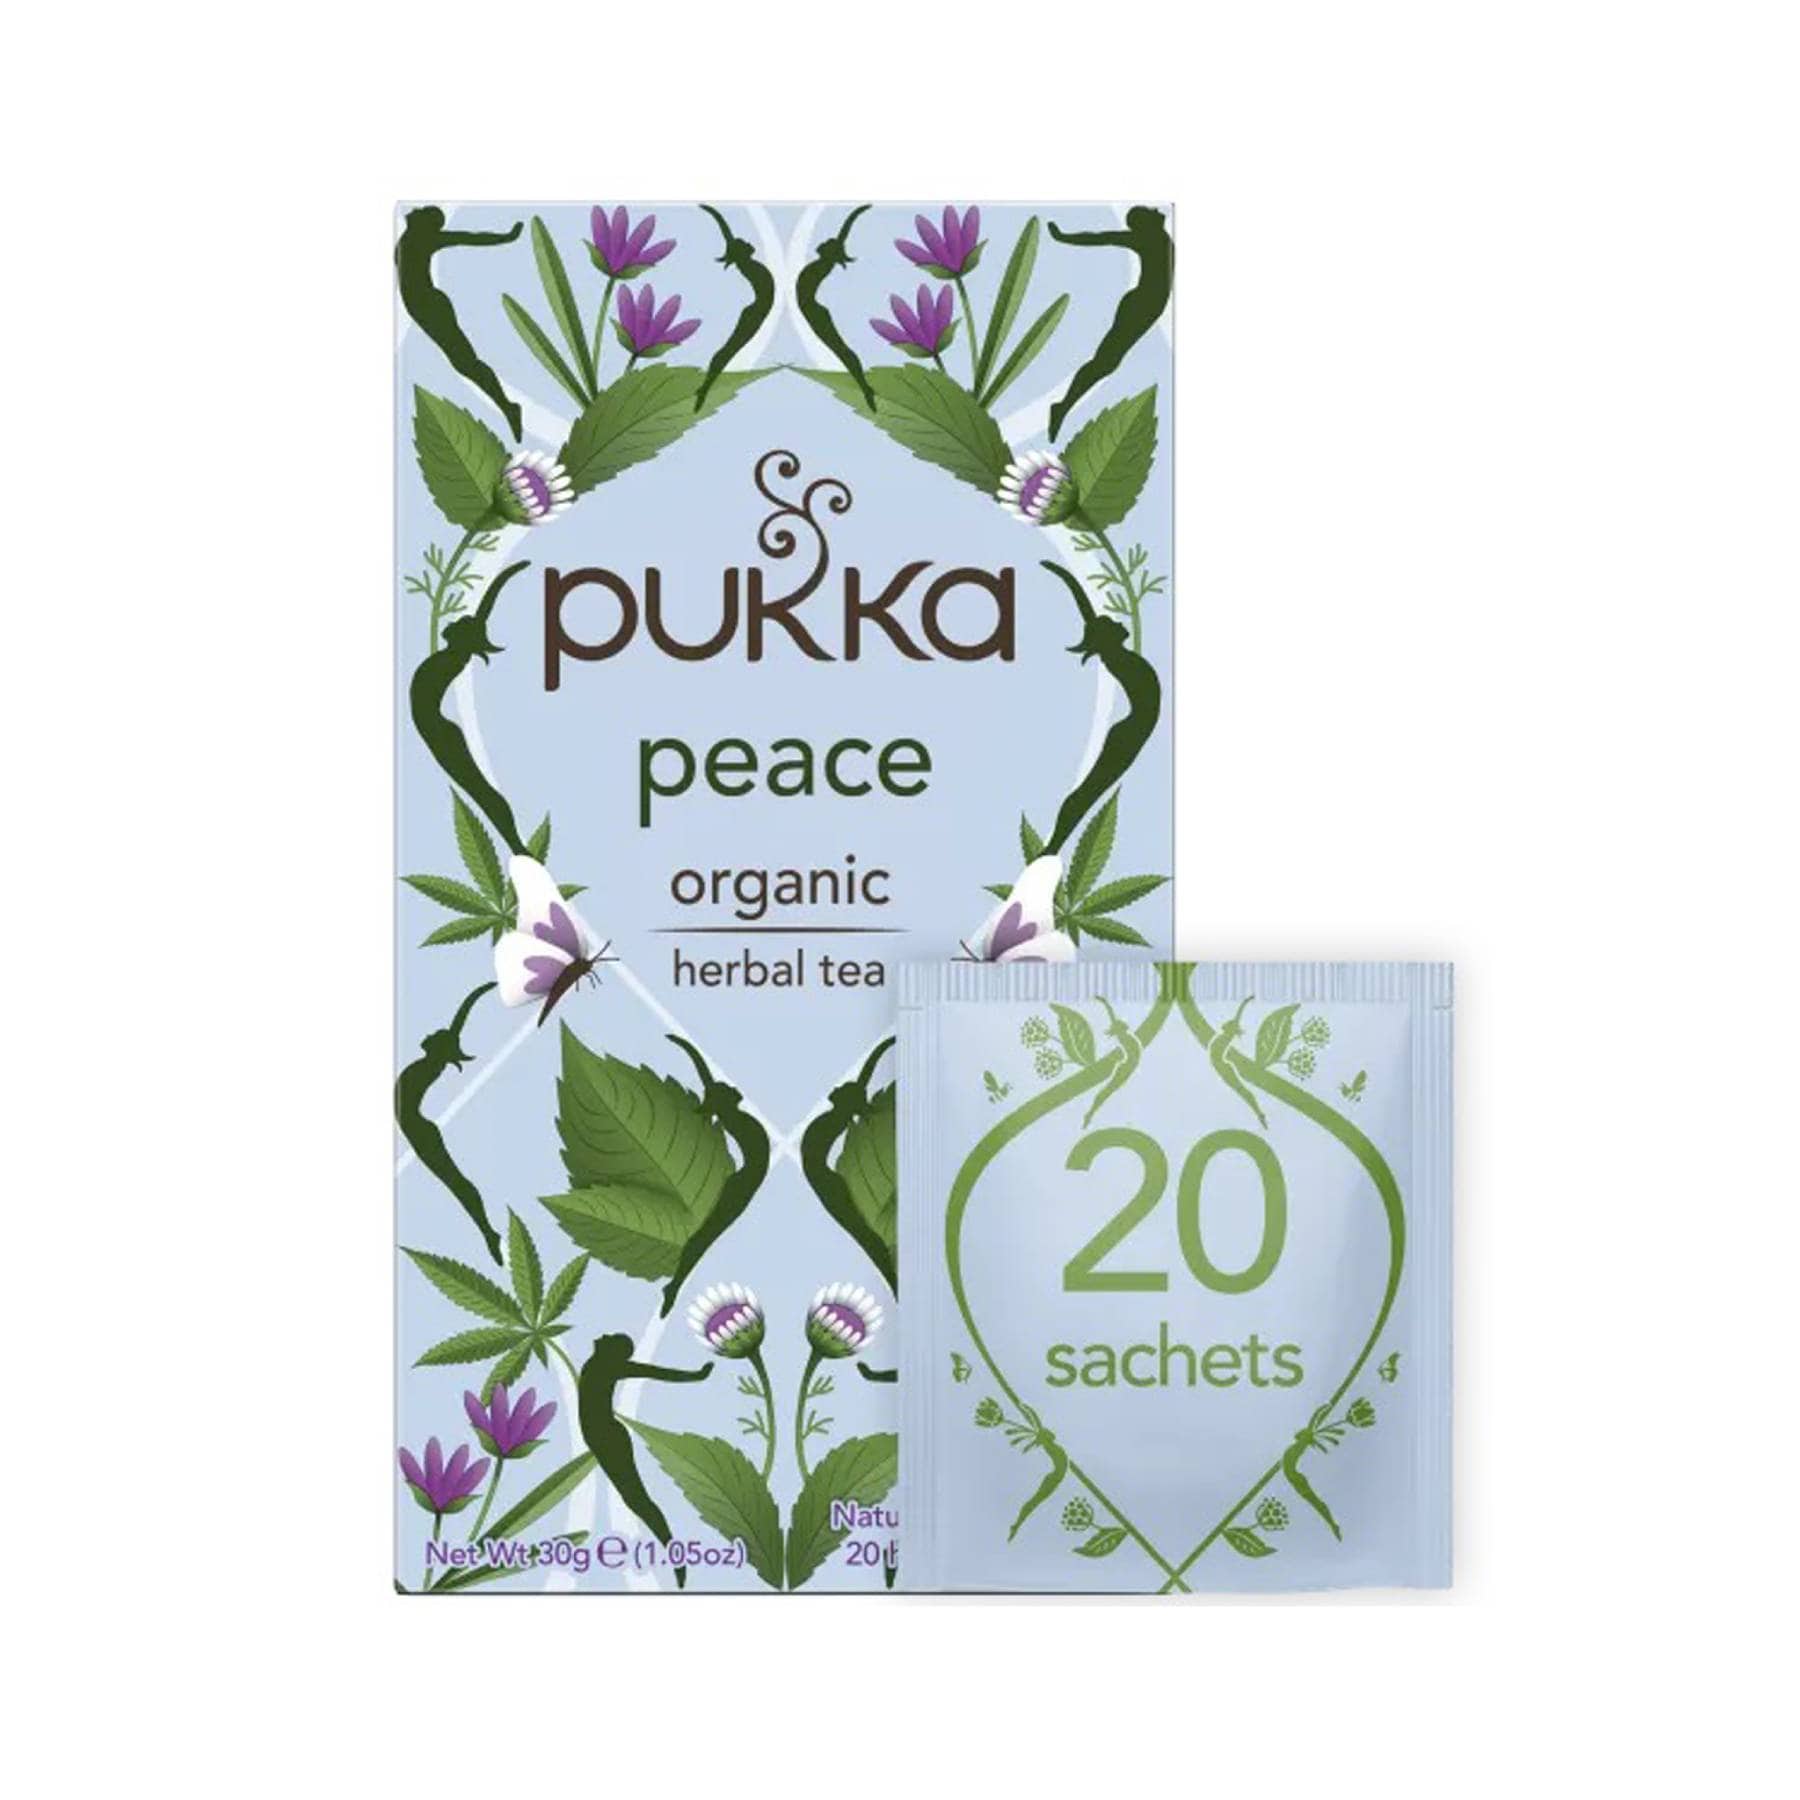 Pukka peace 20 tea bags